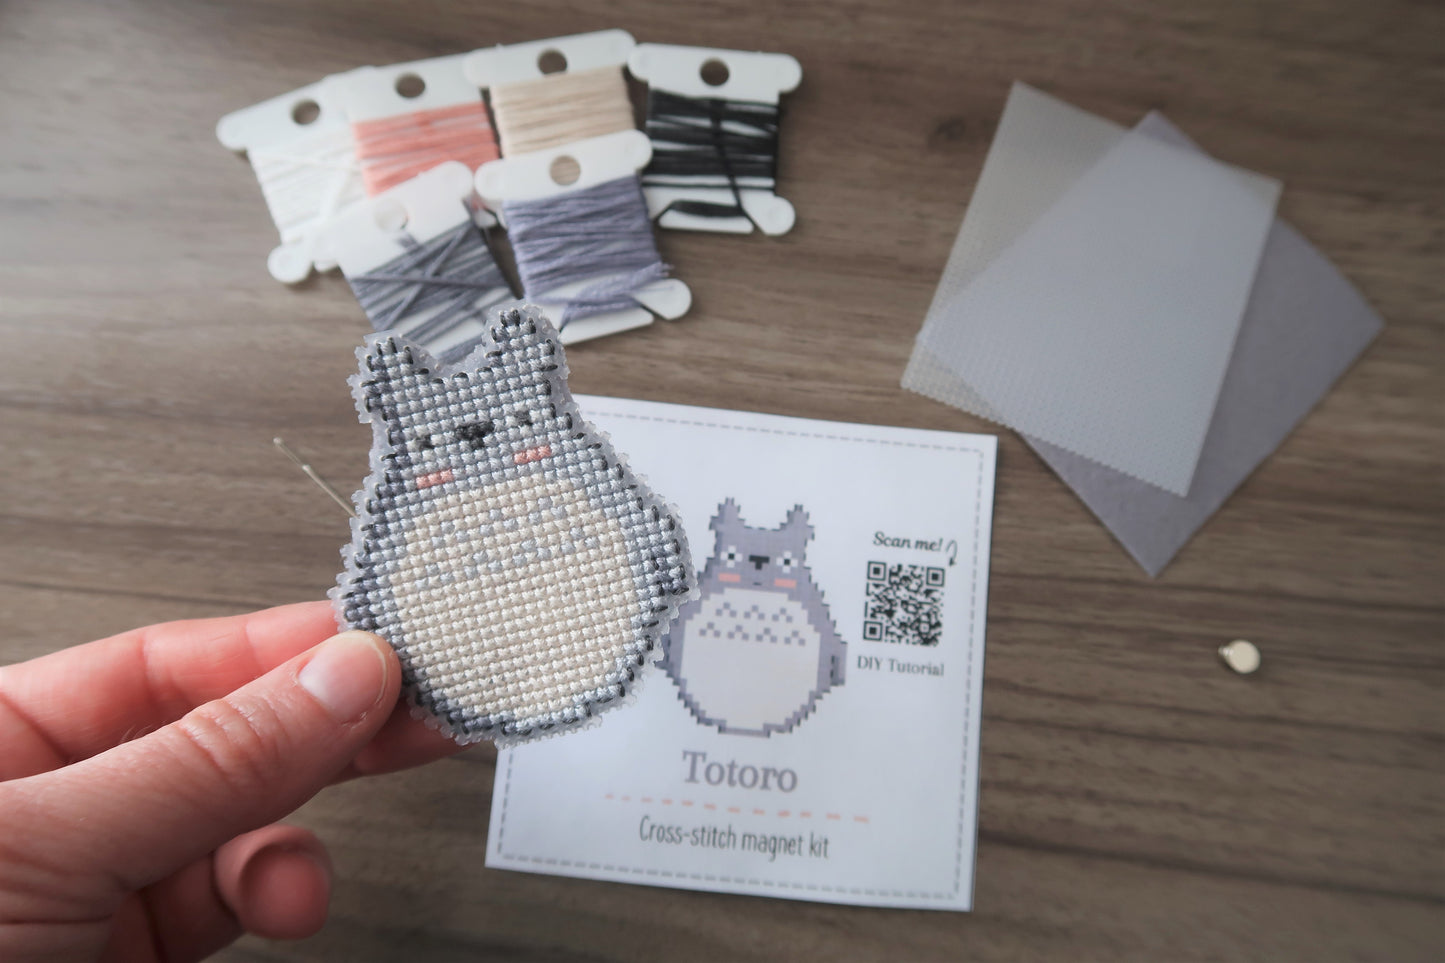 Totoro - Cross stitch magnet kit